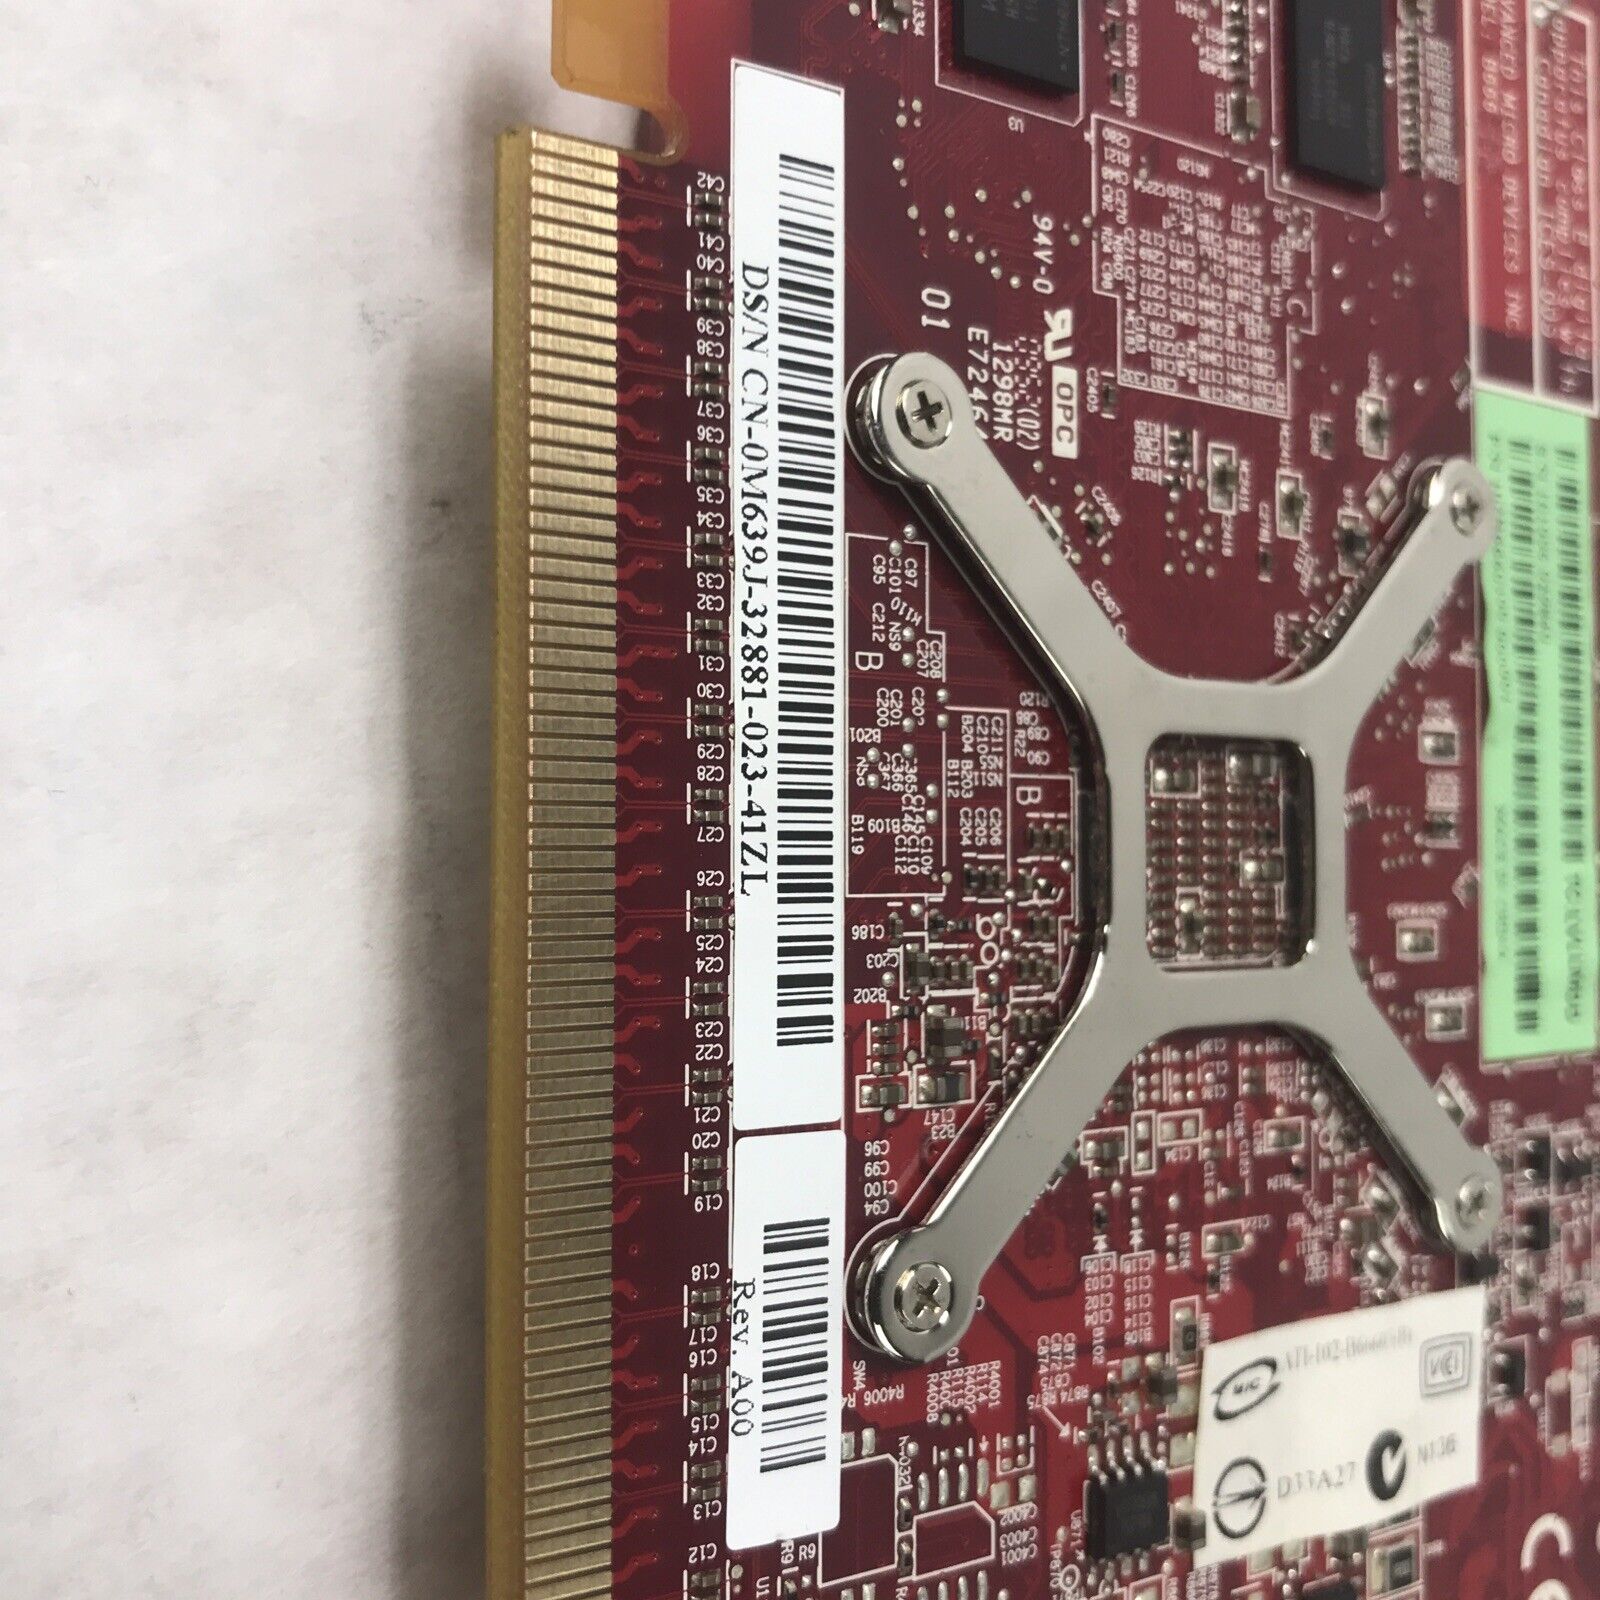 Dell M639J ATI Radeon ATI-102-B66603 512MB PCI-E Graphics Card 2x DVI-I (Tested)